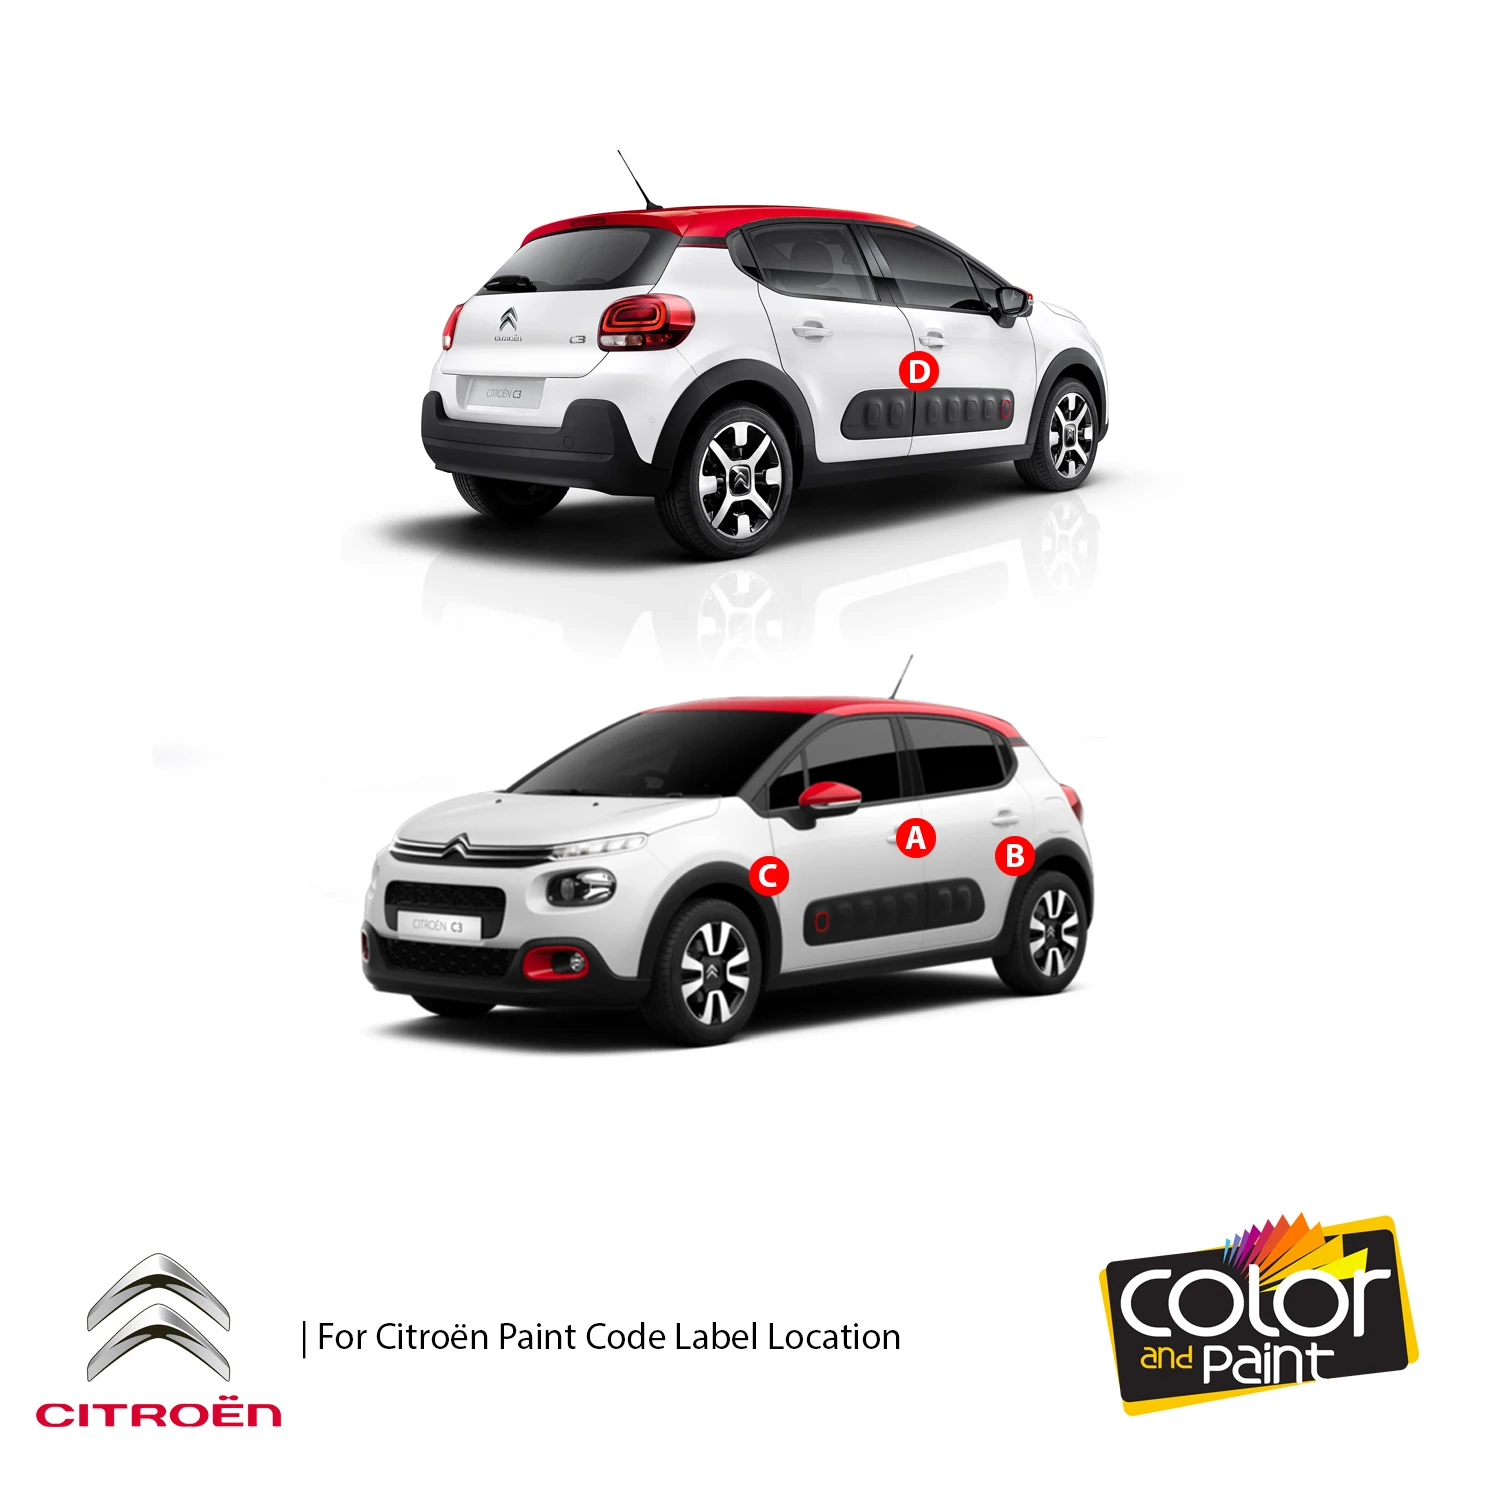 

Color and Paint for Citroen Automotive Touch Up Paint - IVOIRE PAGANINI - J6 - Paint Scratch Repair, exact Match